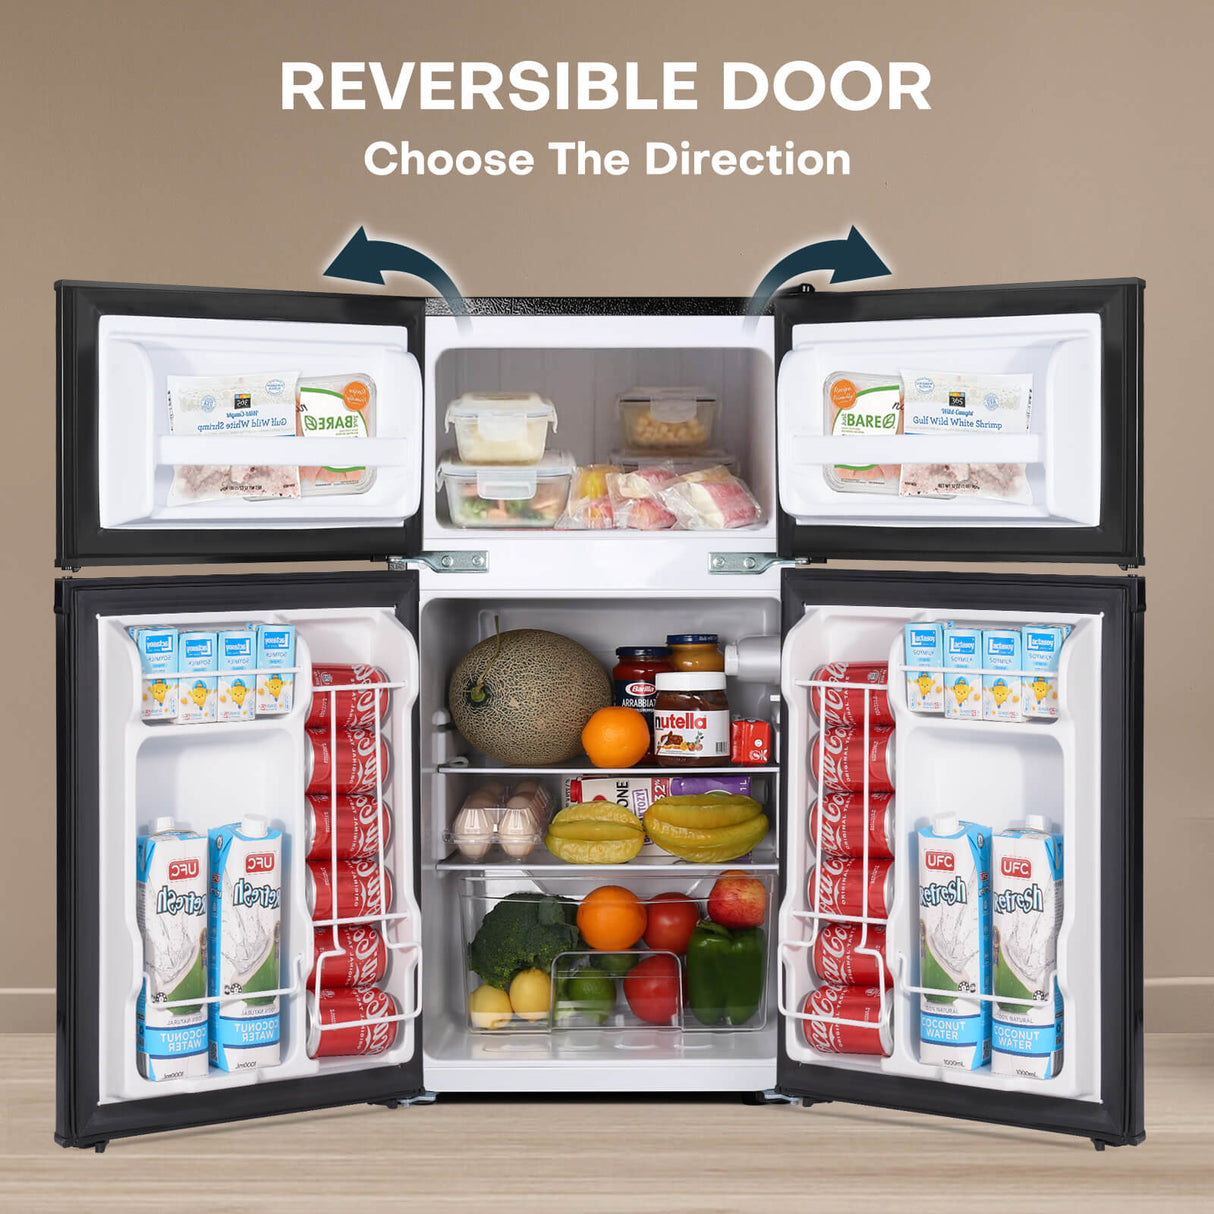 Mini Fridge with Refrigerator, Freezer, and Reversible Door Black